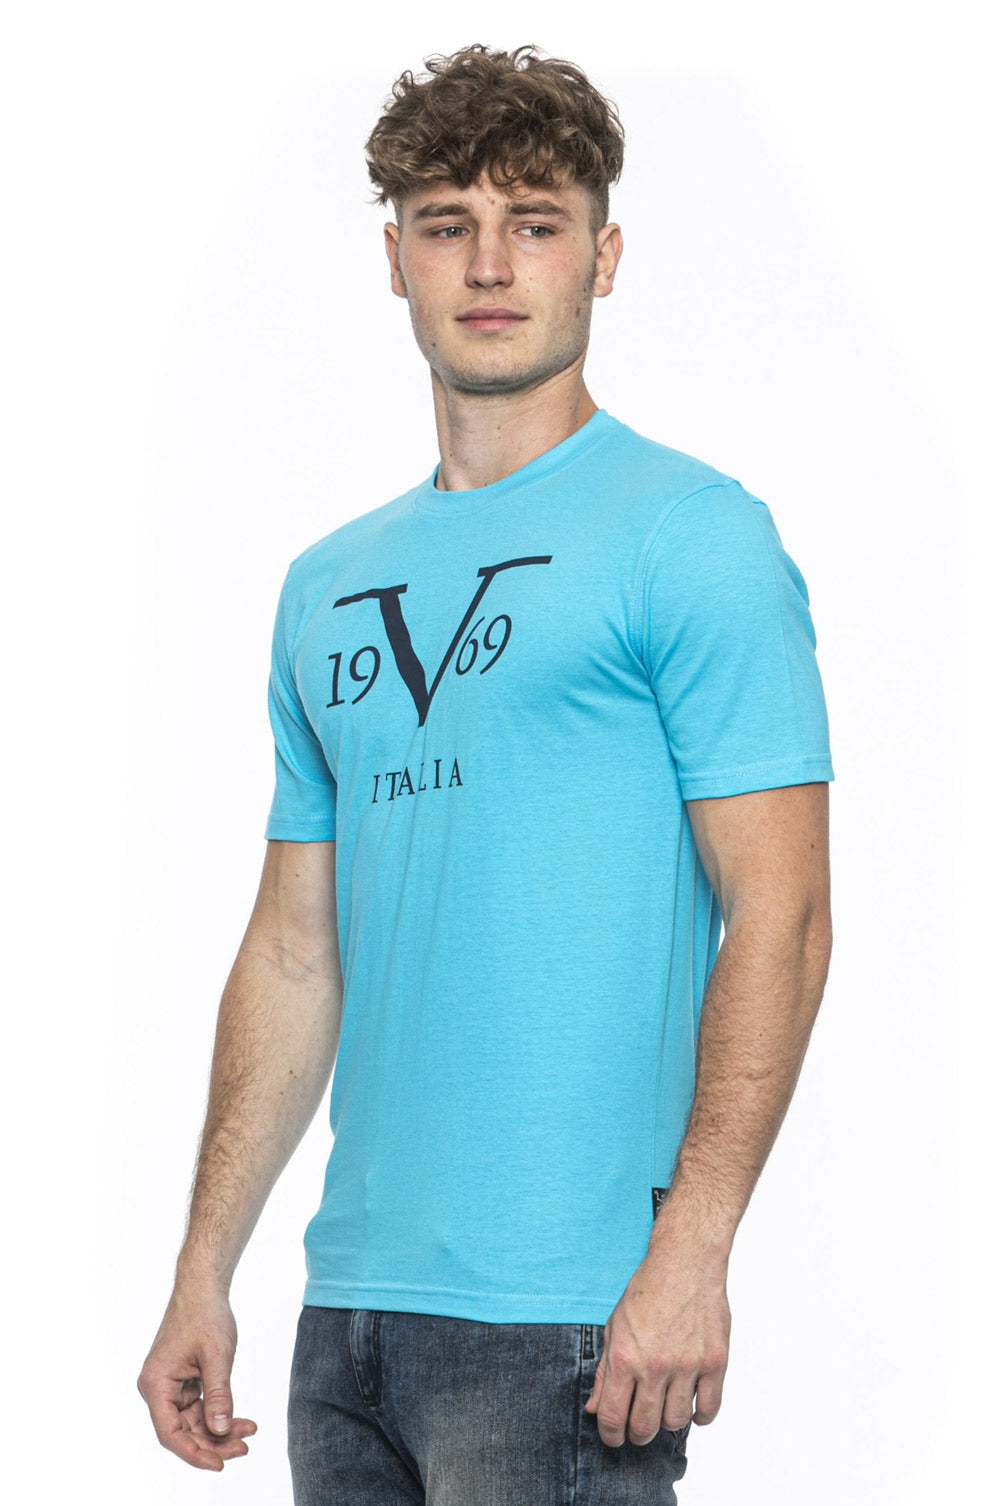 19V69 Italia Mens T-Shirt Light Blue RAYAN TURQUOISE